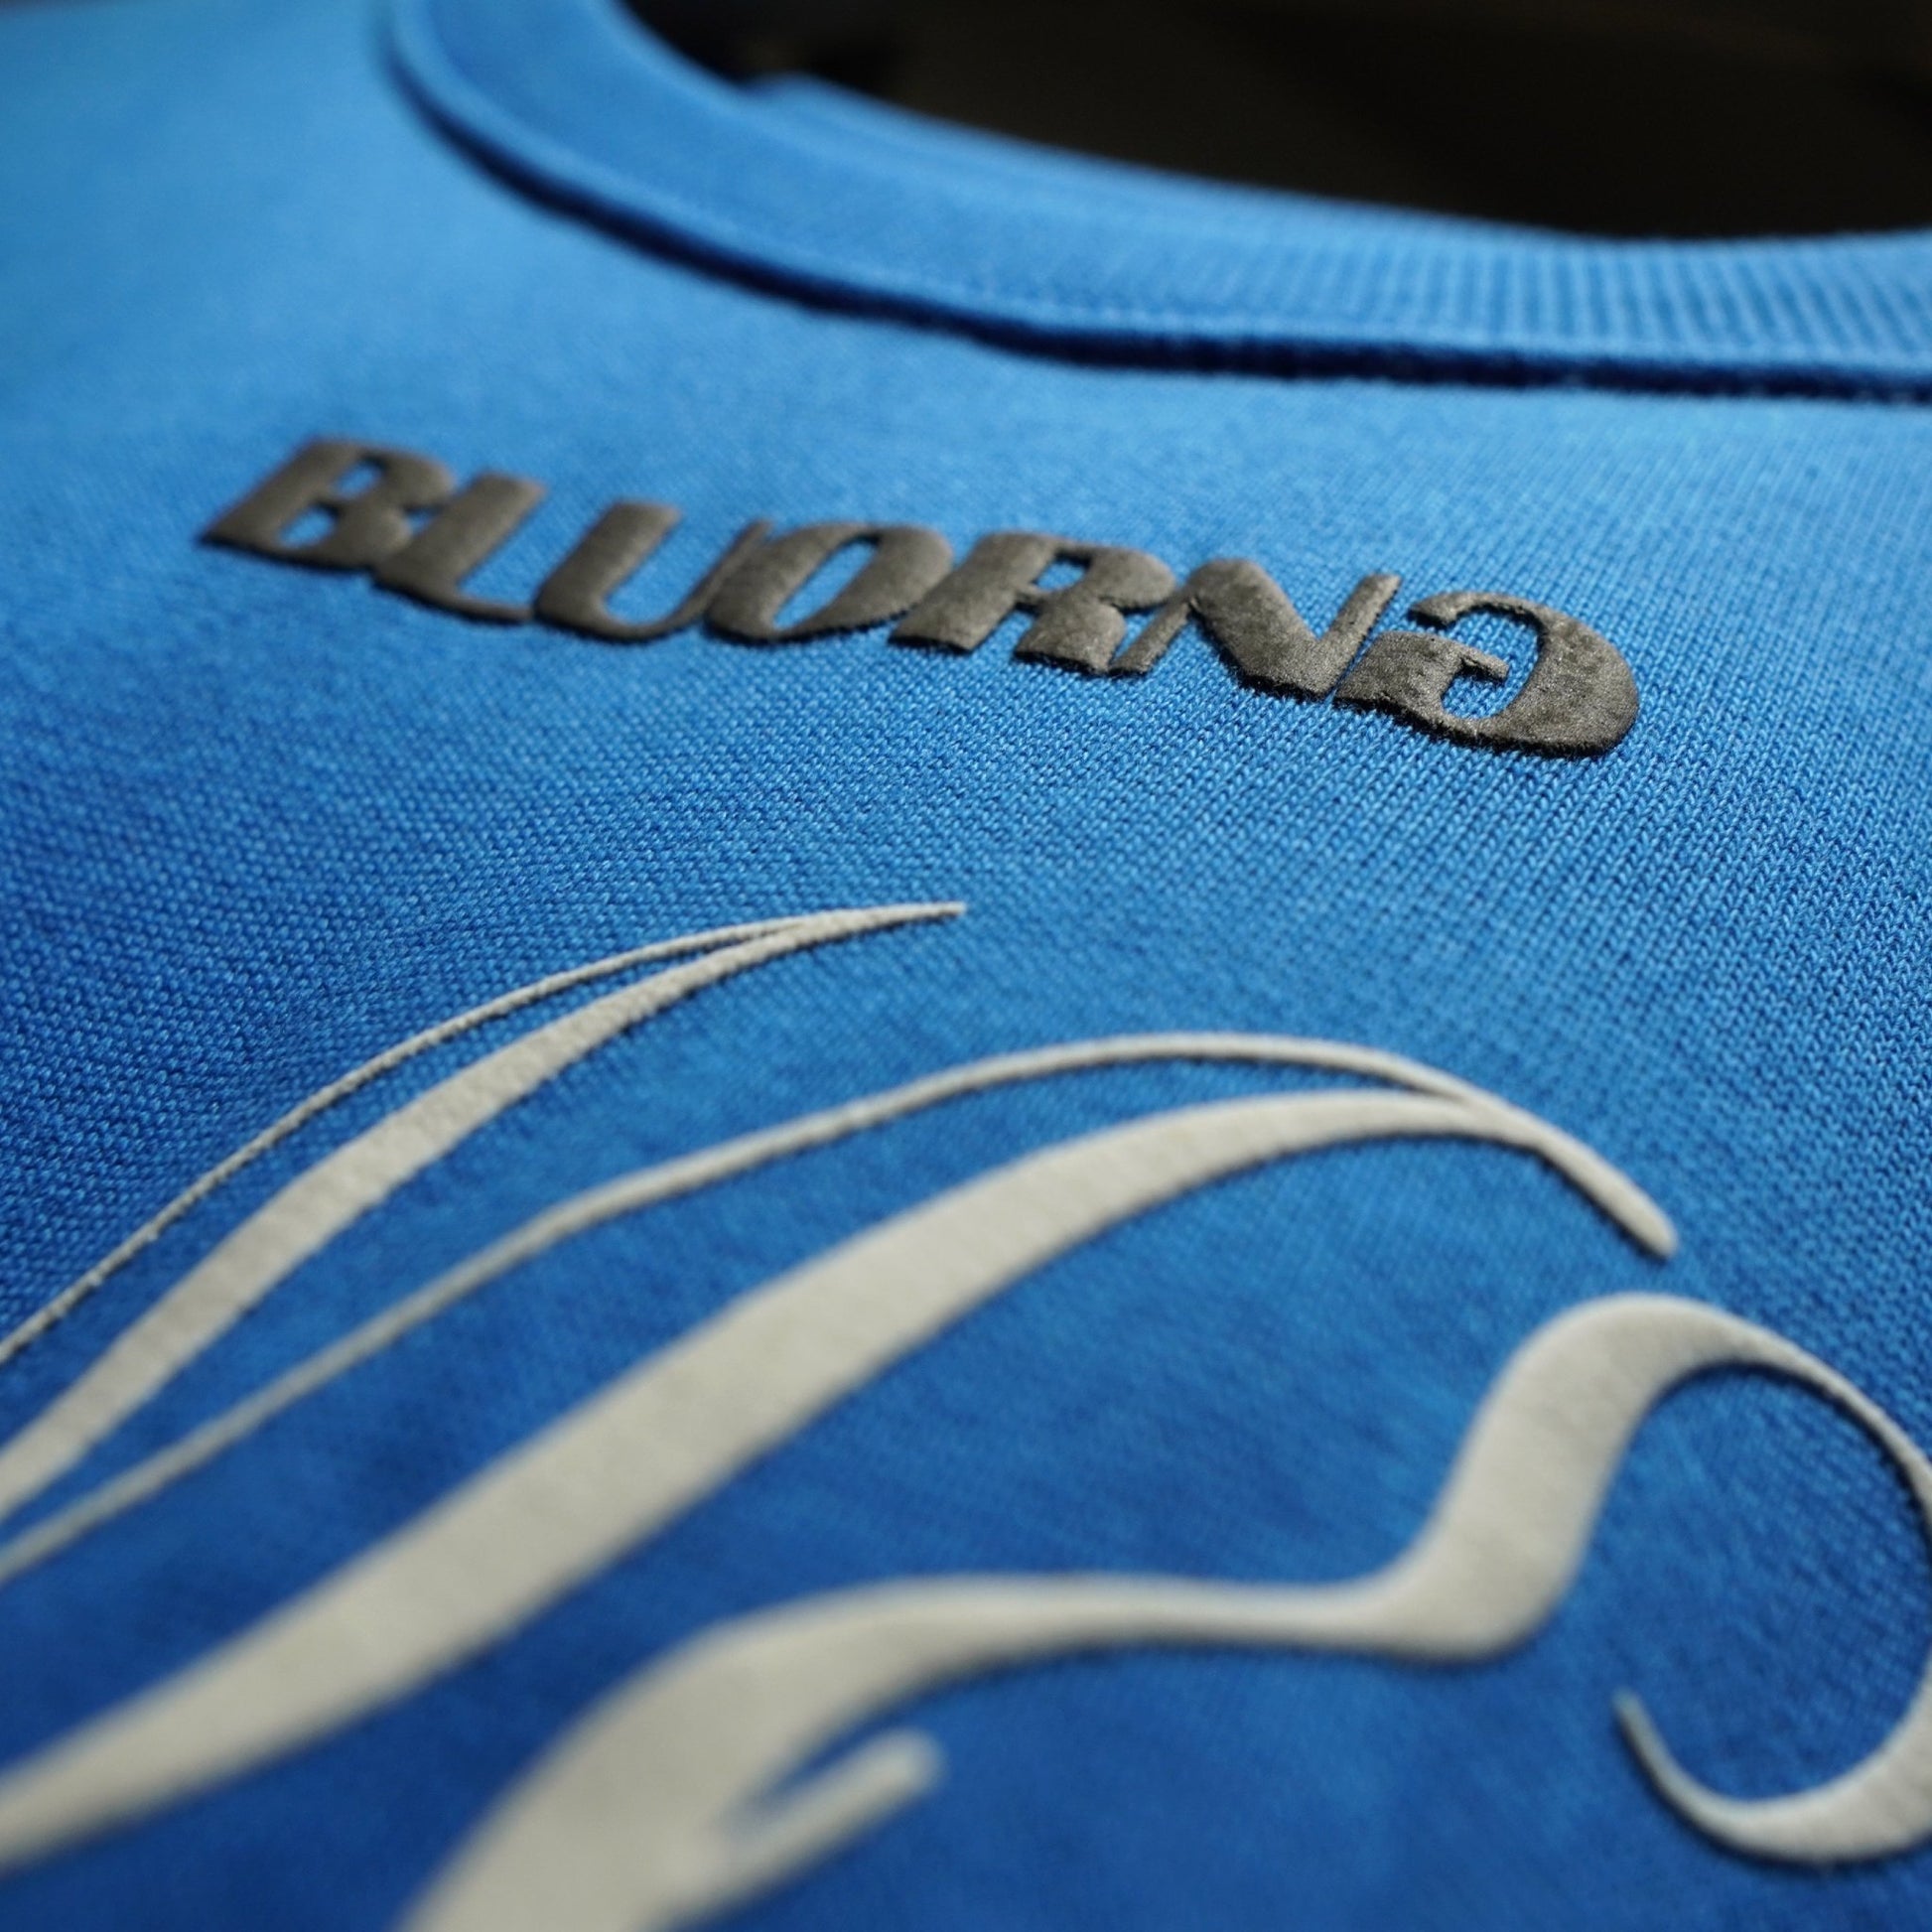 Blu Favour Sweatshirt - Bluorng